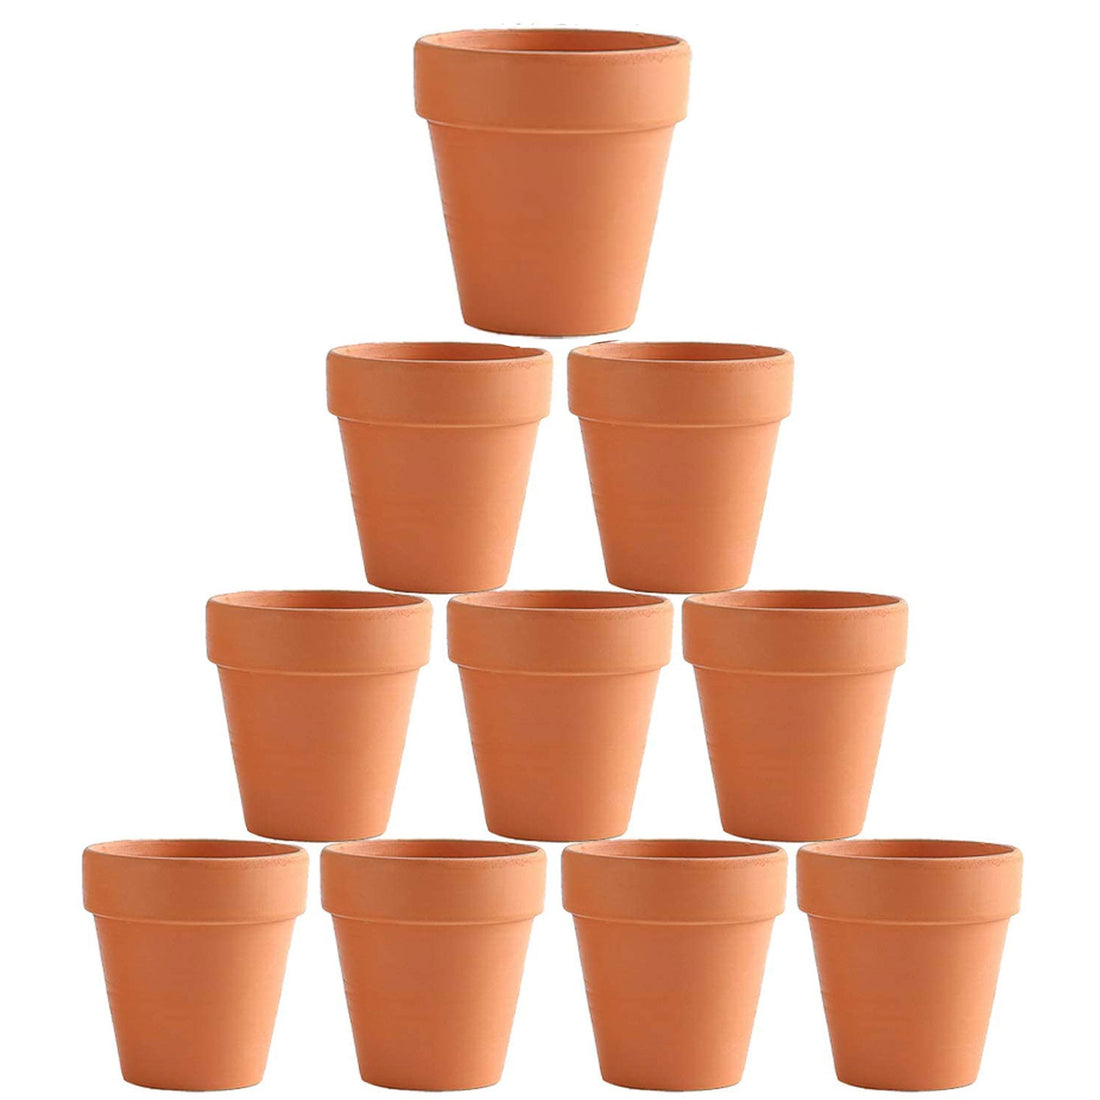 garden pots for sale in australia